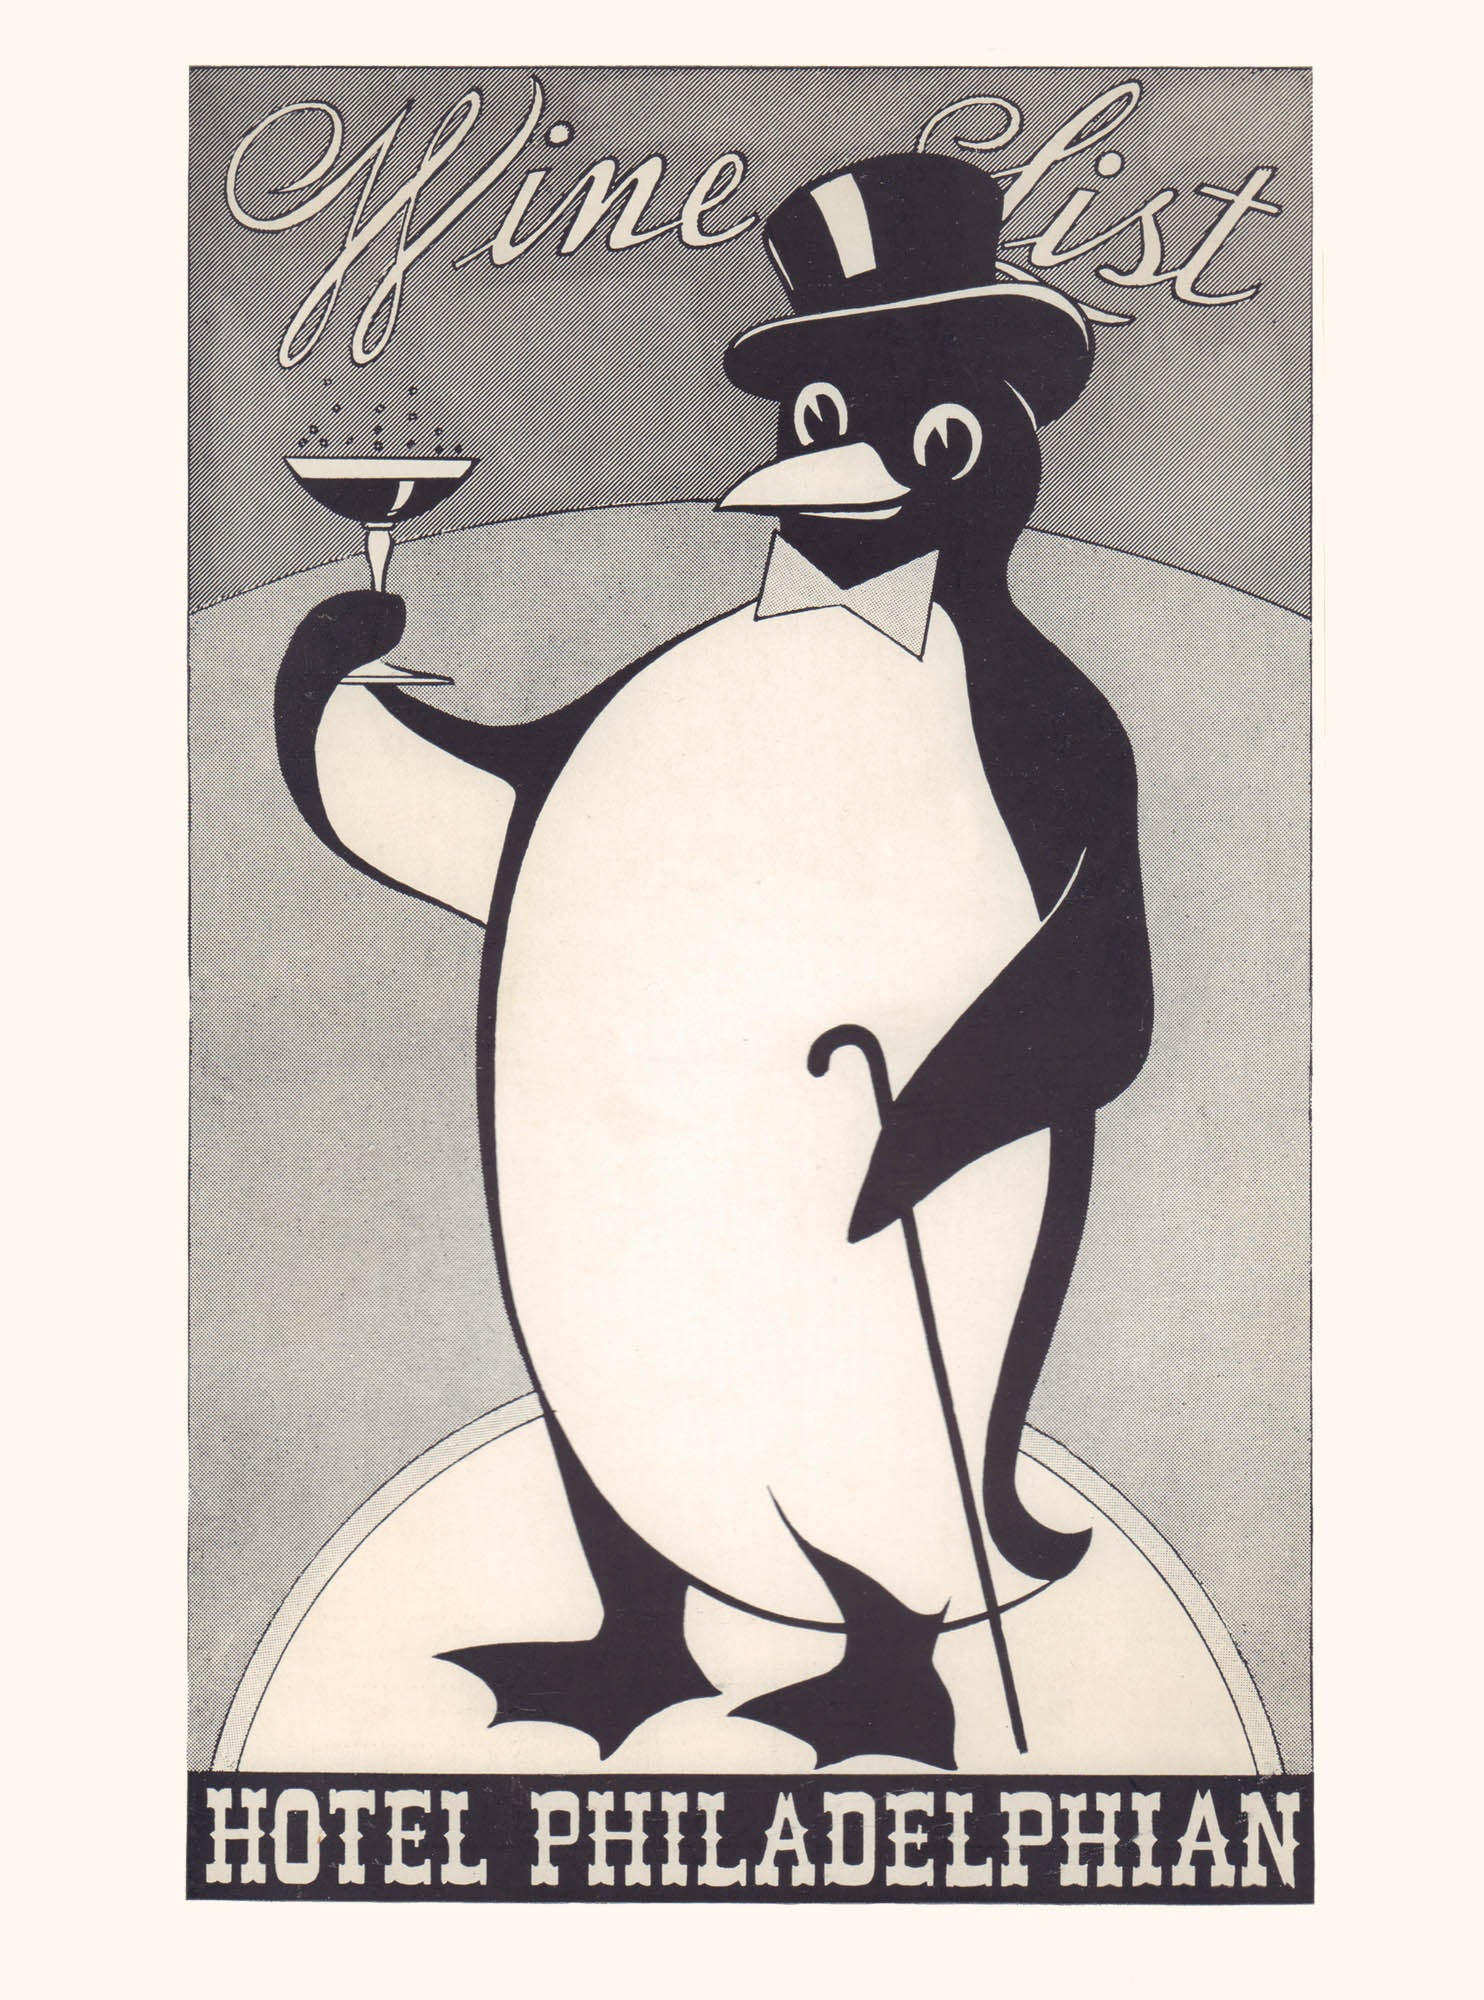 Hotel Philadelphian, Wine List 1940s Penguin menu art 